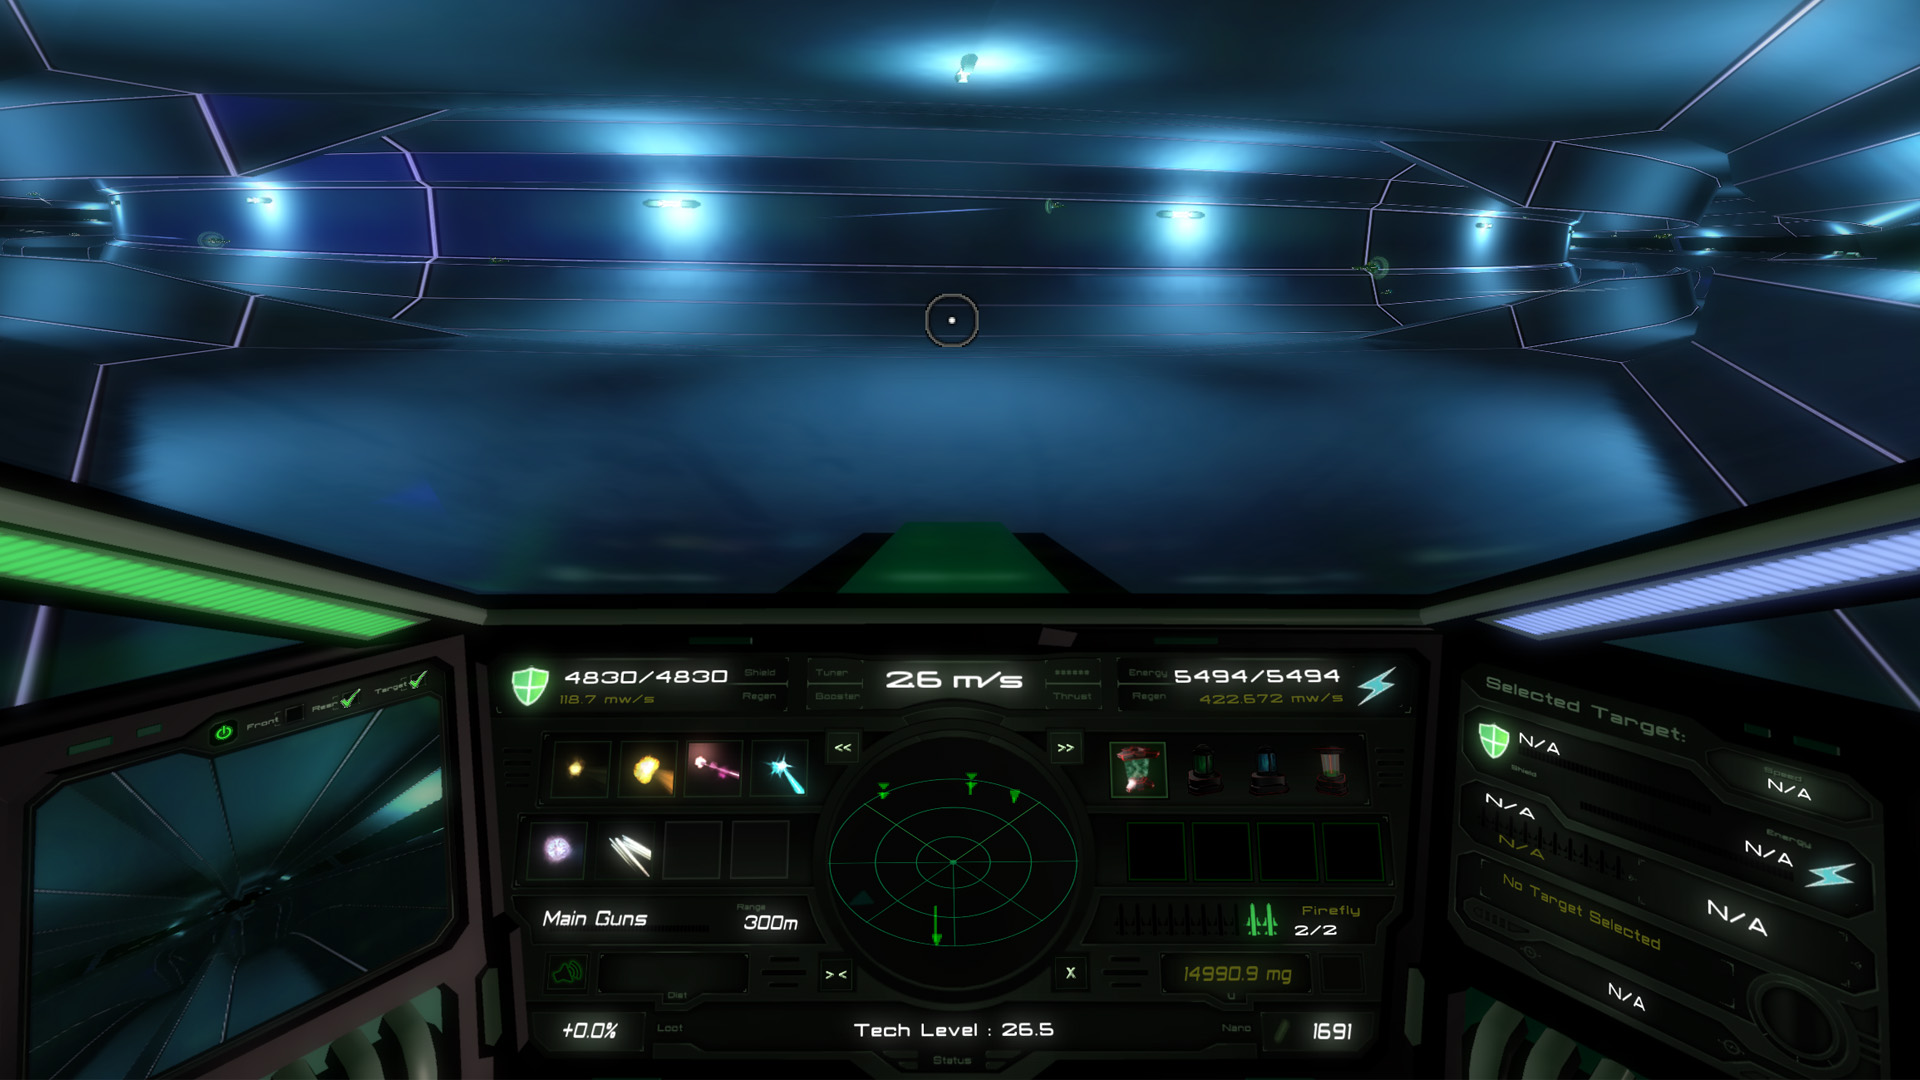 Inside Spaceship Cockpit